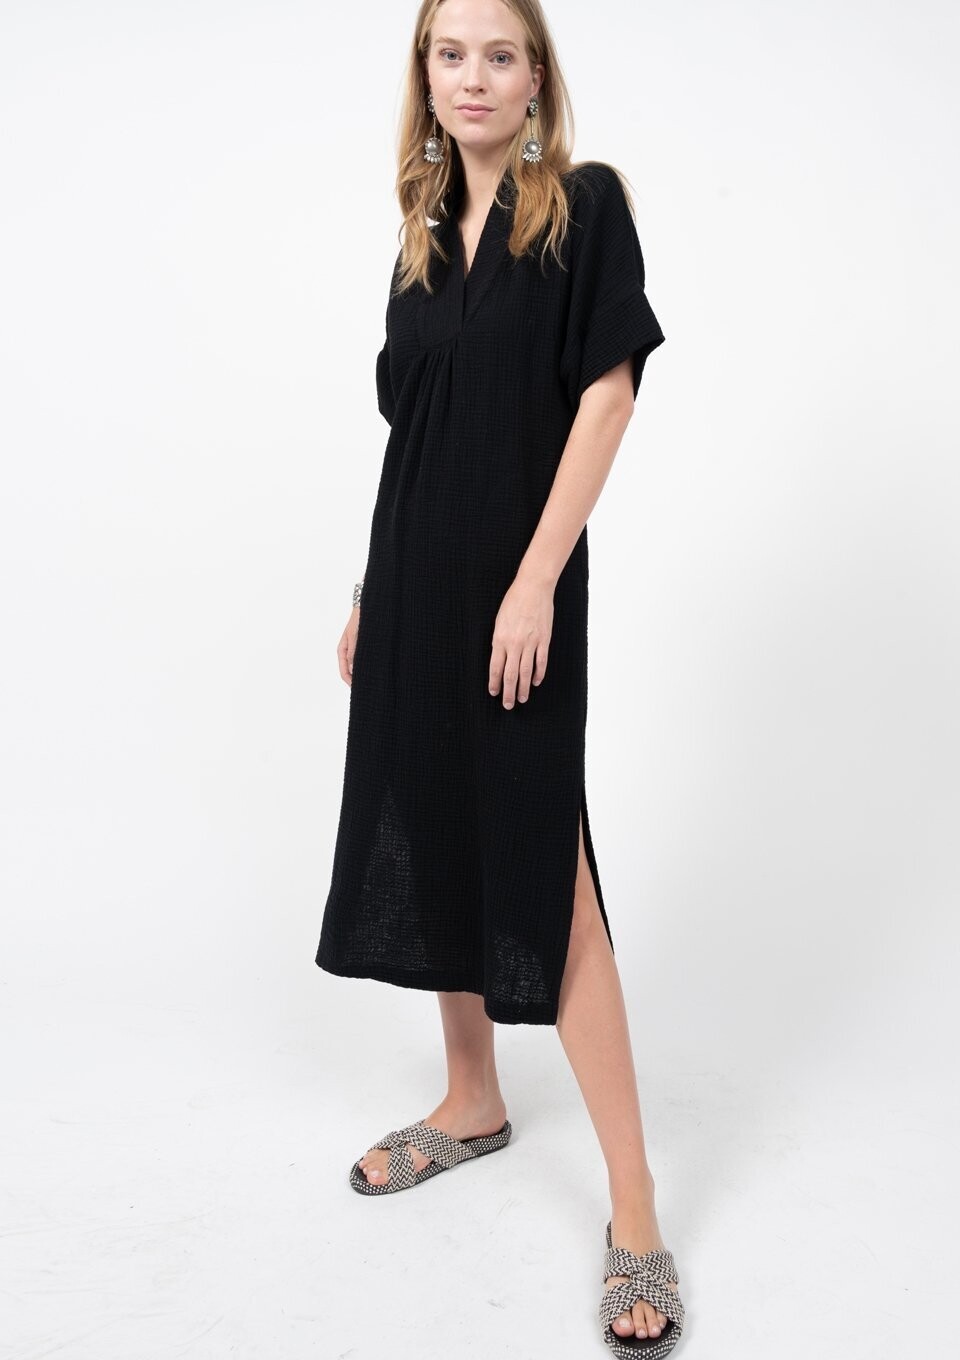 IVY JANE Gauzee Black Pullover Midi Dress